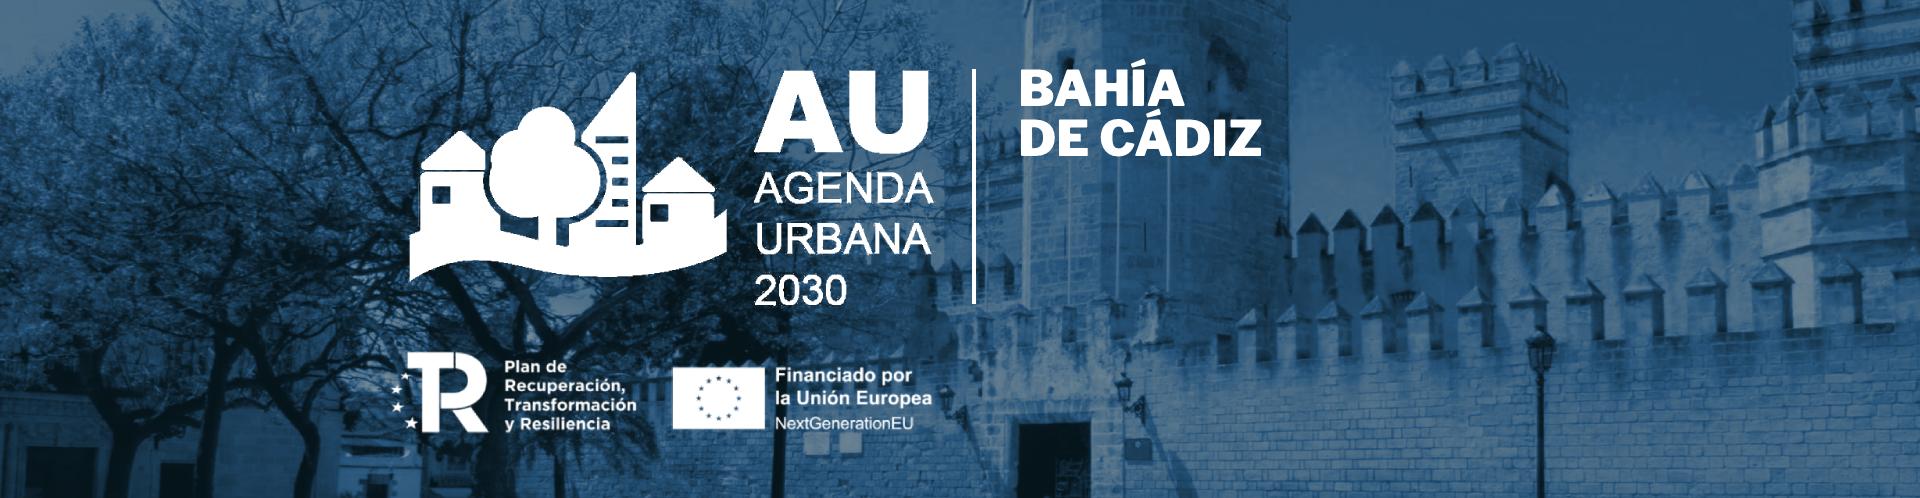 Agenda Urbana 2030 Bahía de Cádiz